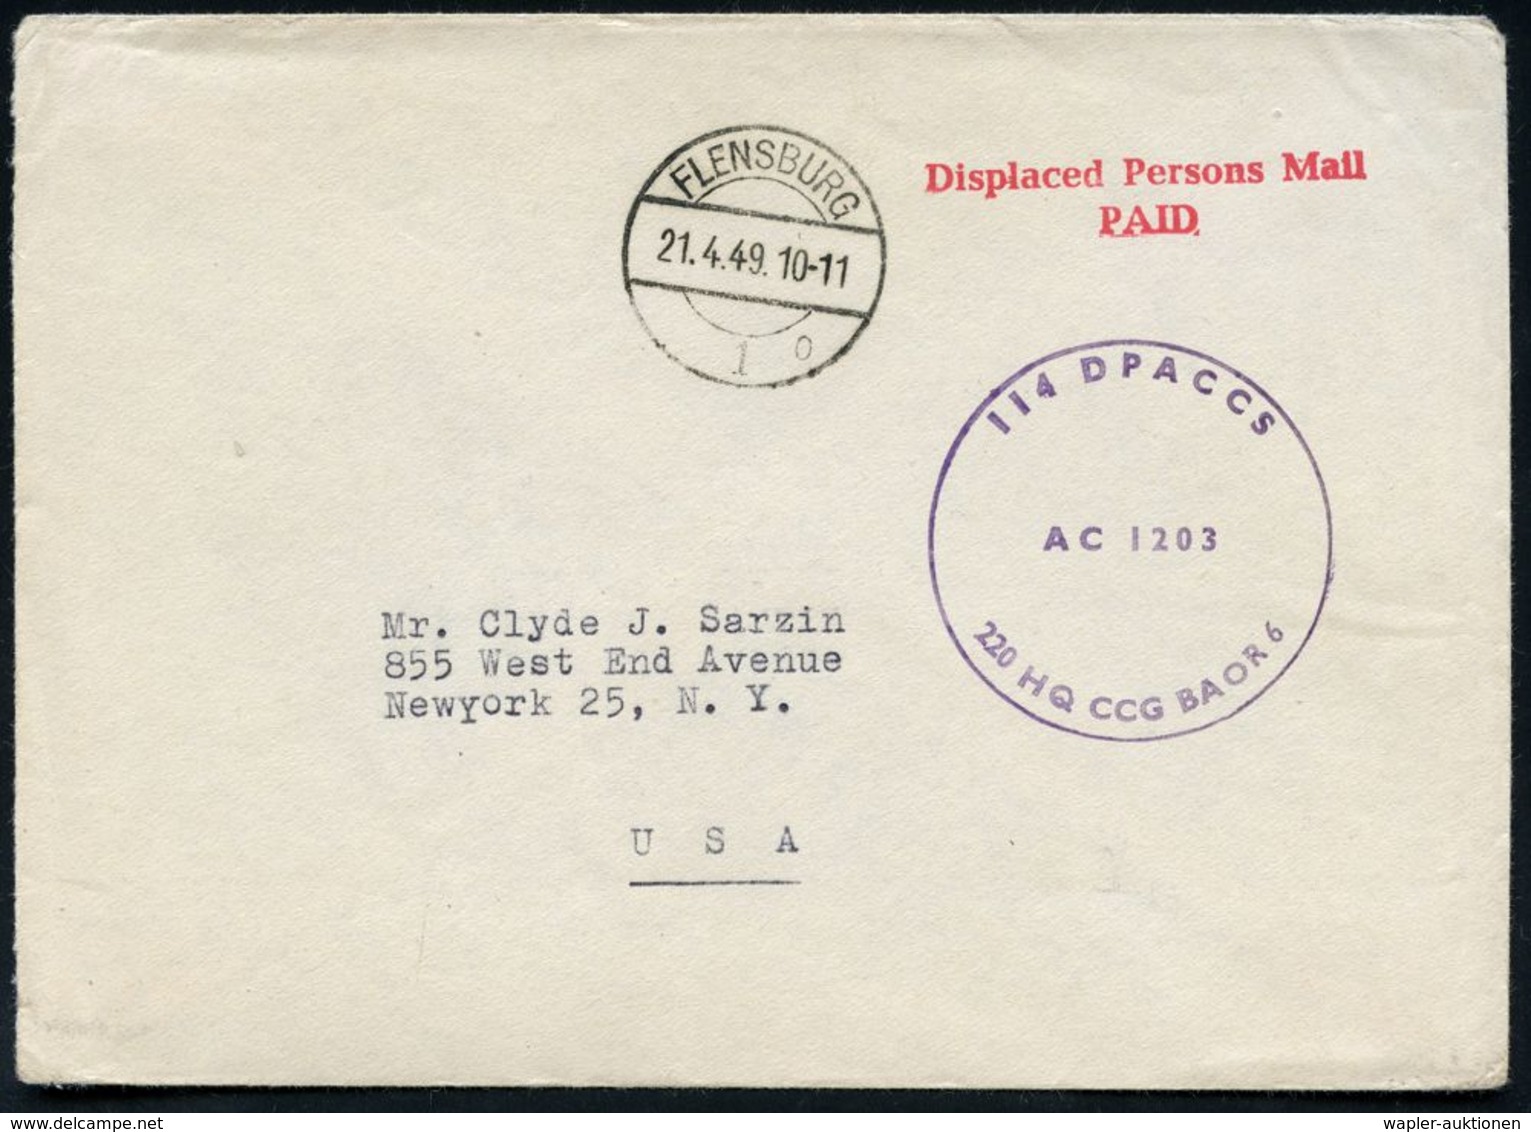 FLENSBURG/ 1/ O 1949 (21.4.) 1K-Steg + Roter 2L: Displaced Persons Mail / PAID + Viol. 1K-HdN: 114 DPACCS/AC 1203/22 HQ  - VN